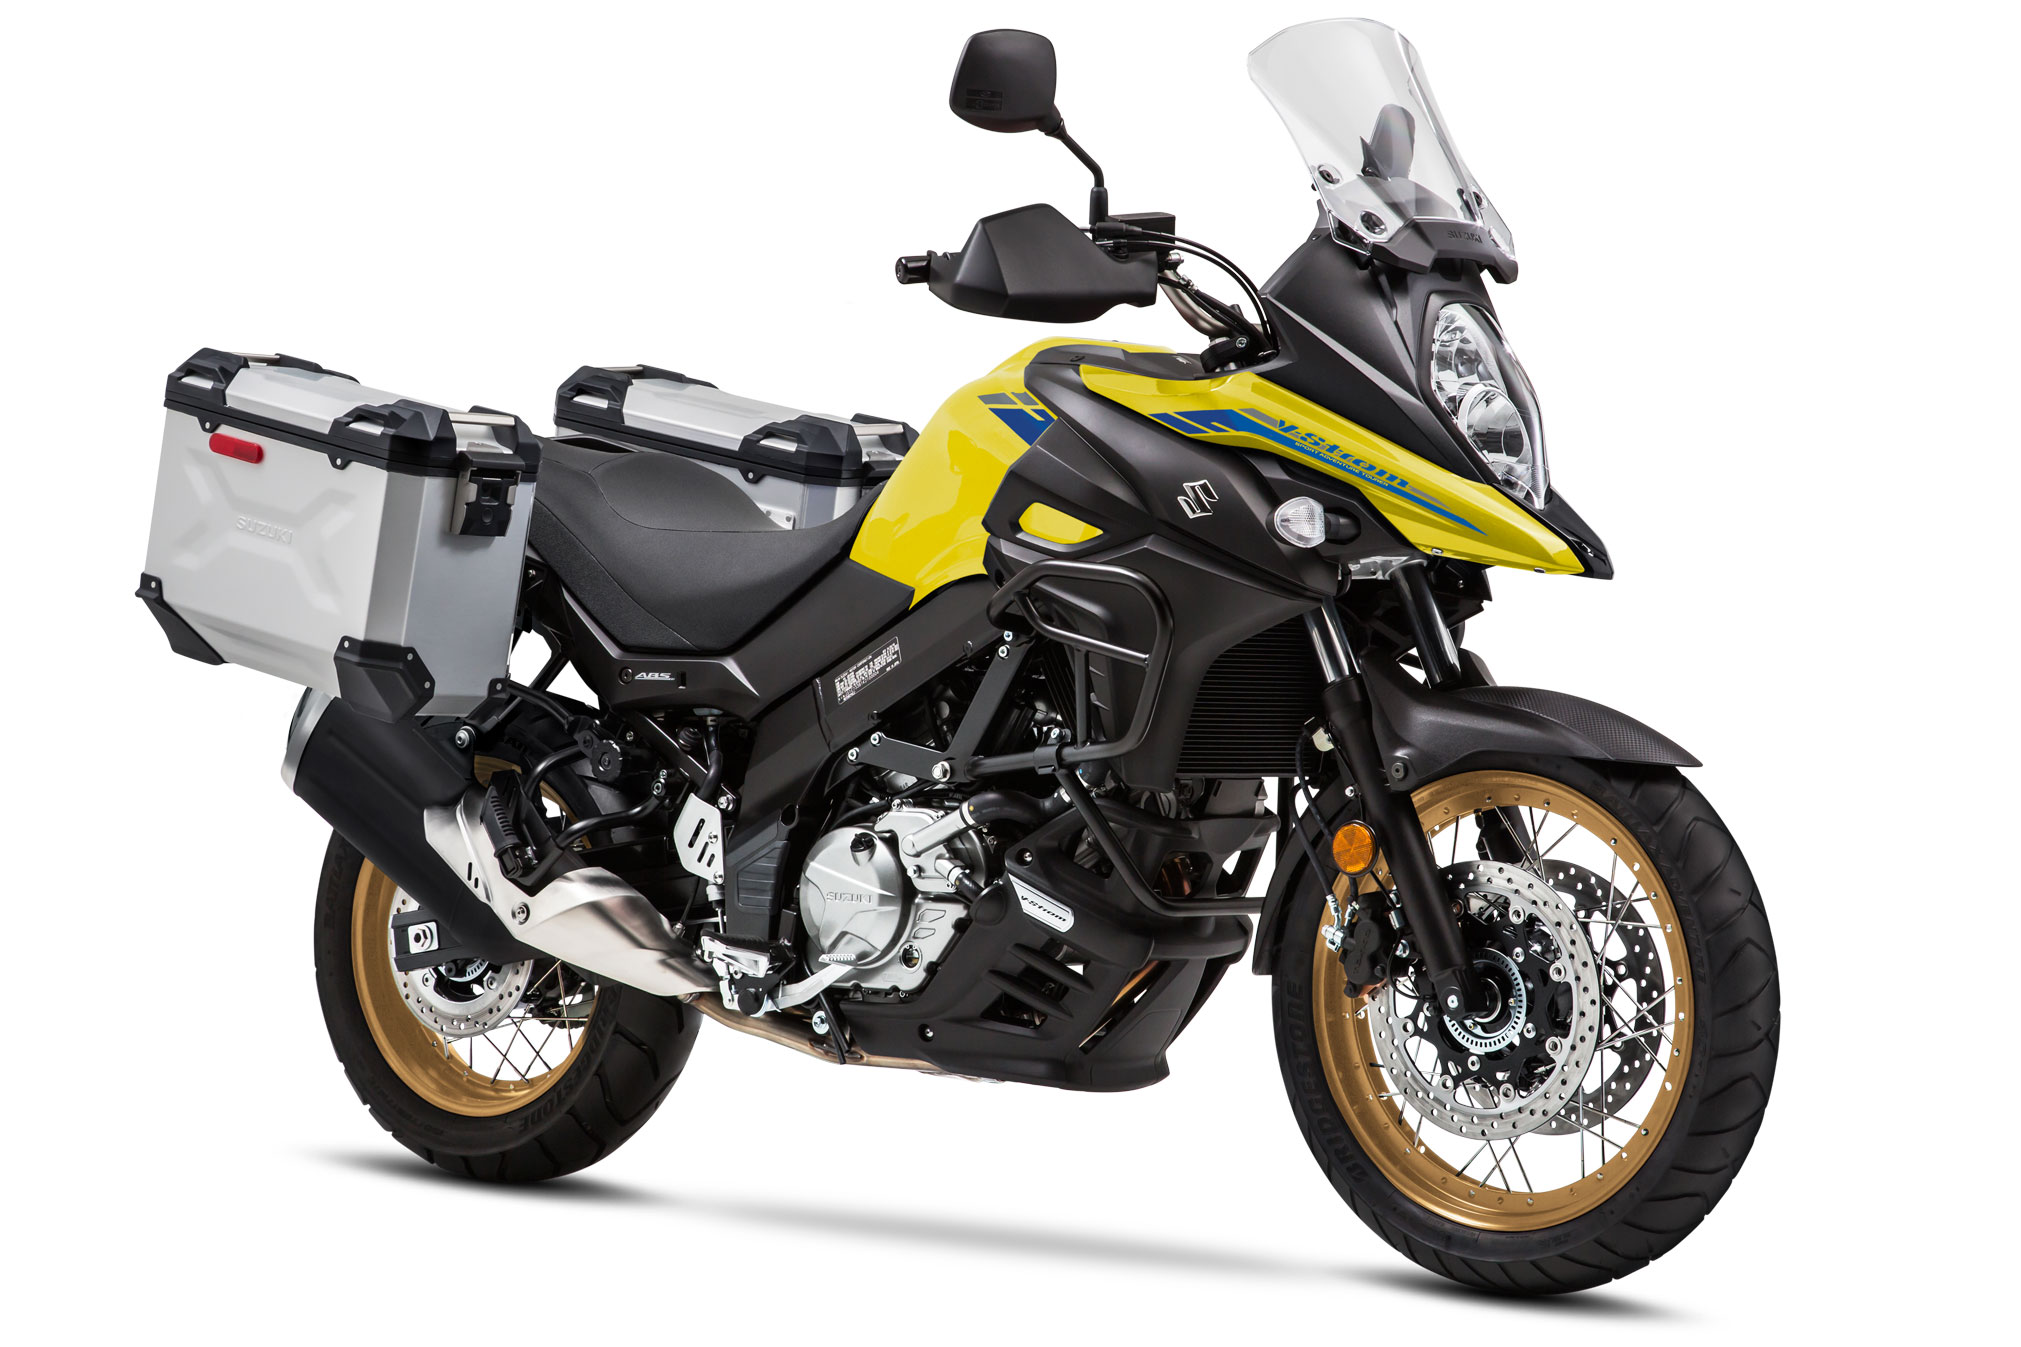 2021 Suzuki V-Strom 650XT Adventure Guide • Total Motorcycle